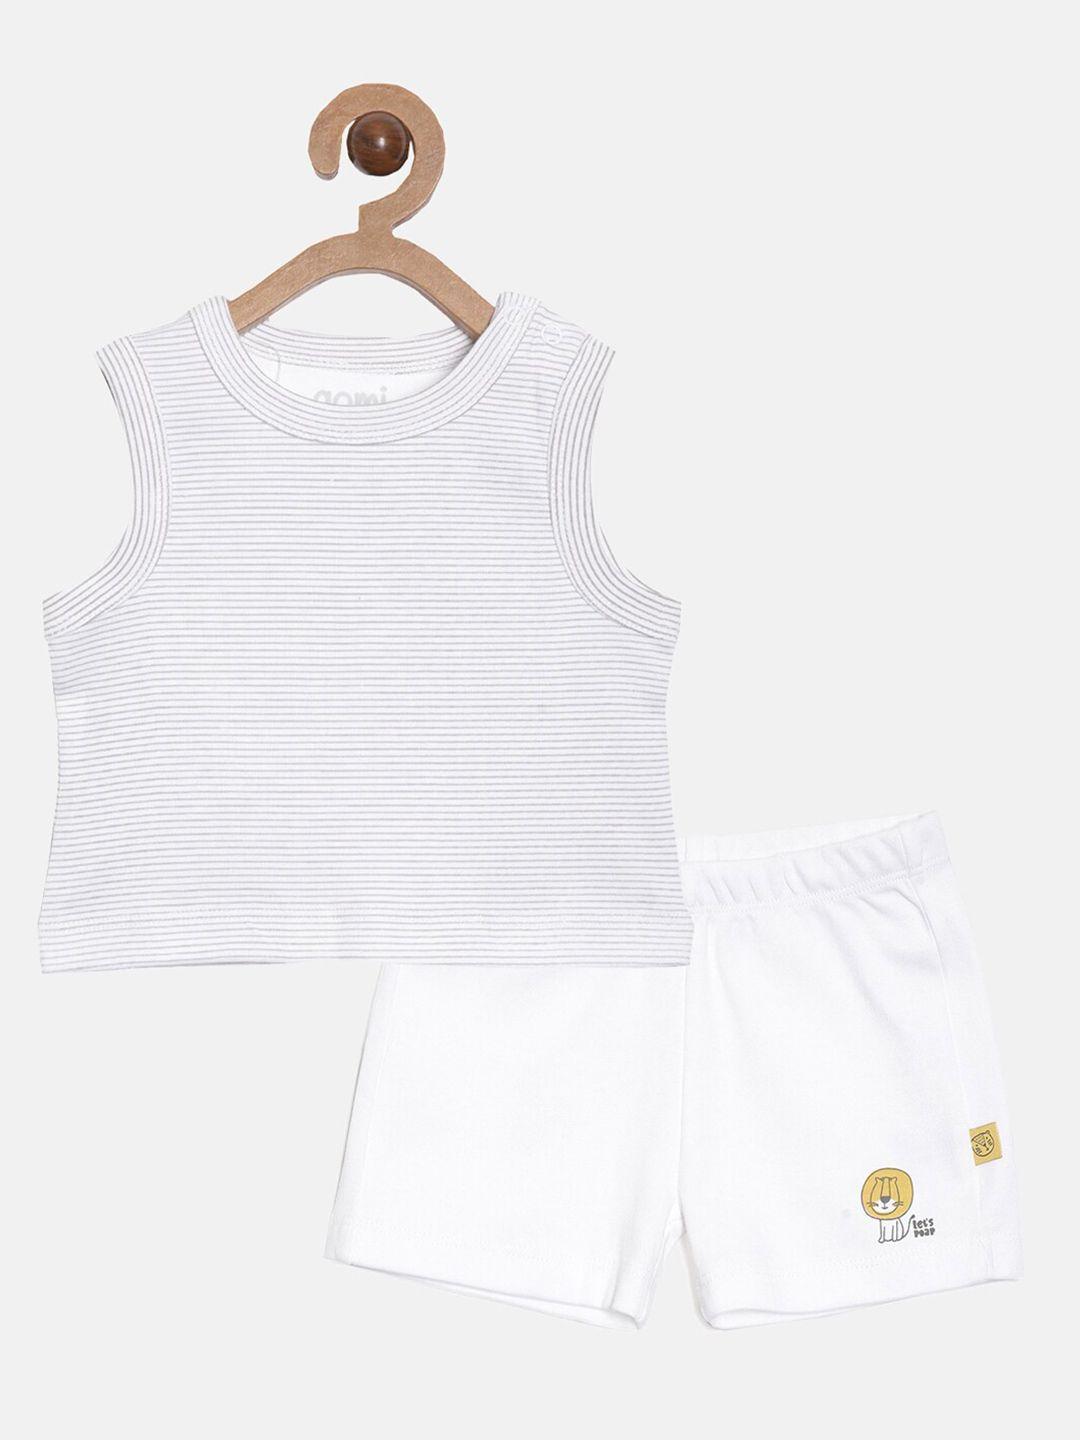 aomi boys white & grey printed cotton top with shorts clothing set